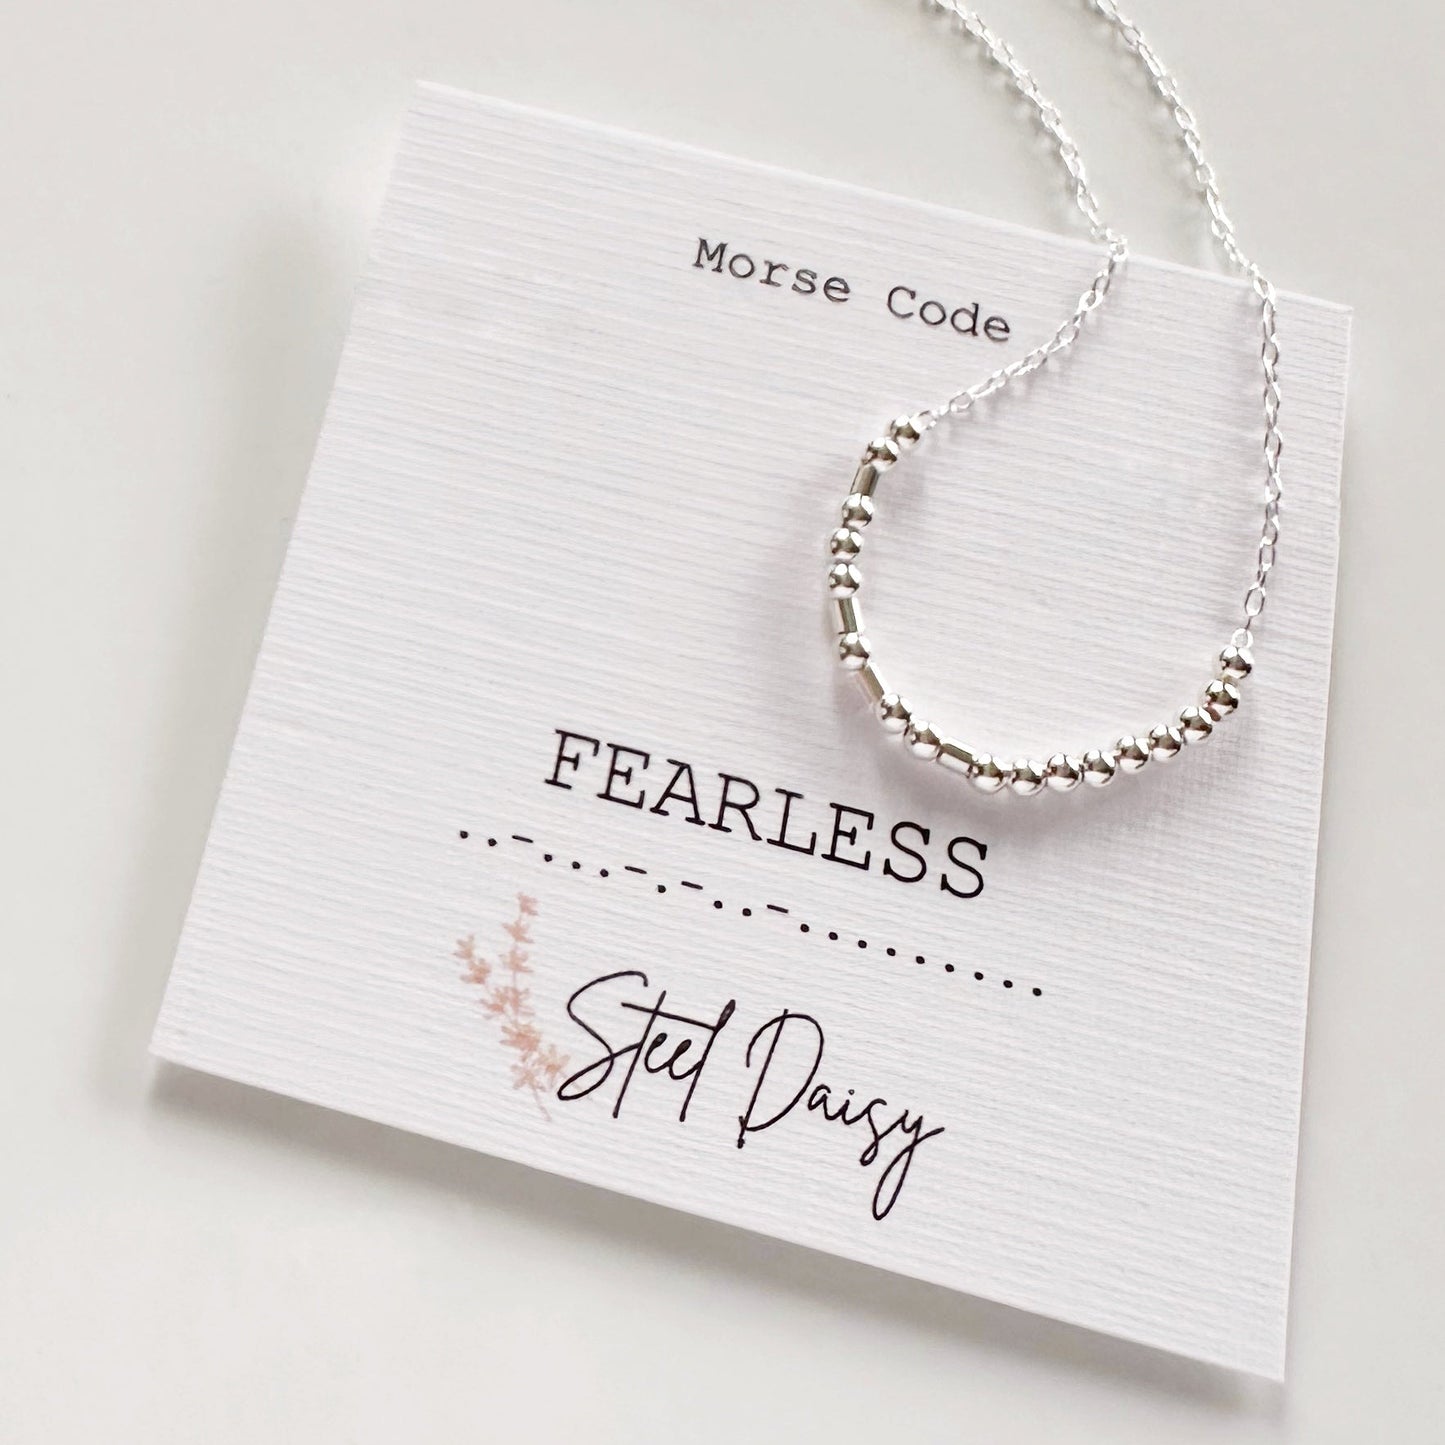 Fearless, Morse Code